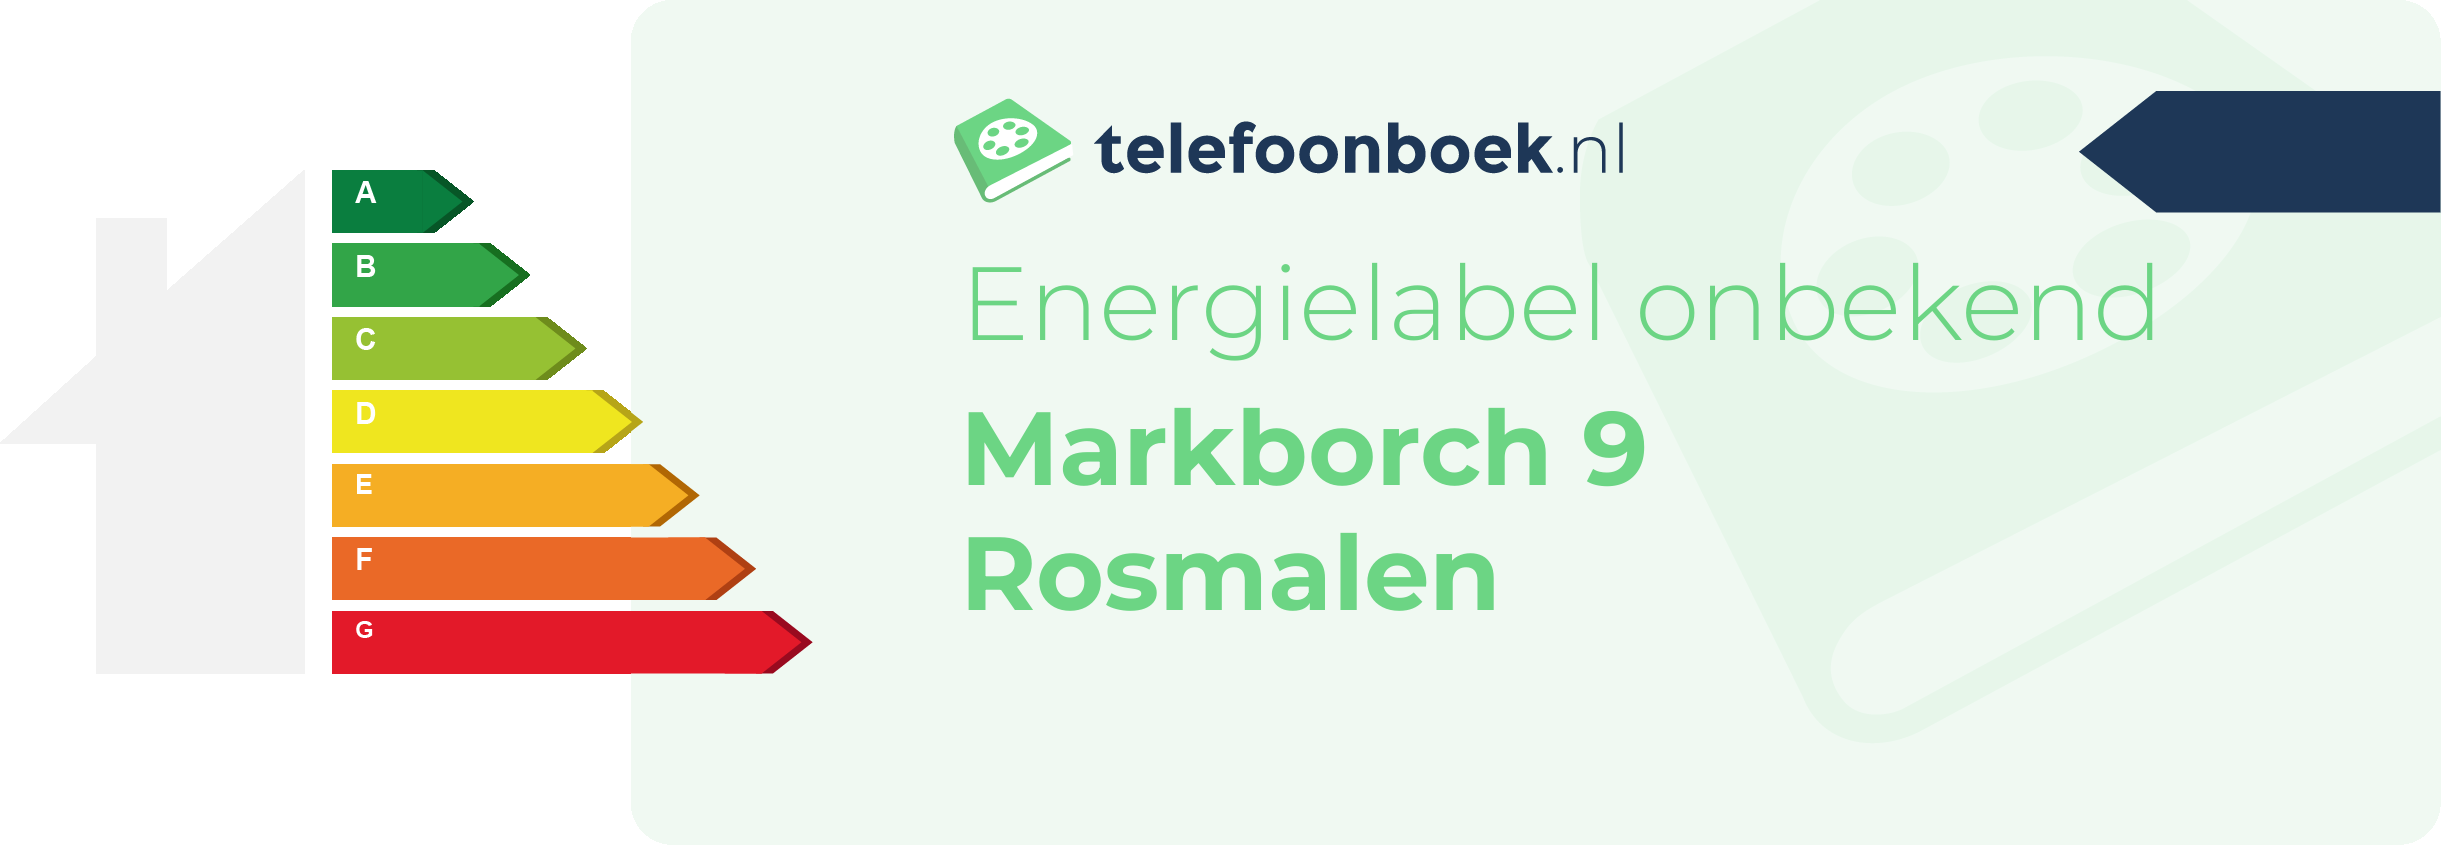 Energielabel Markborch 9 Rosmalen